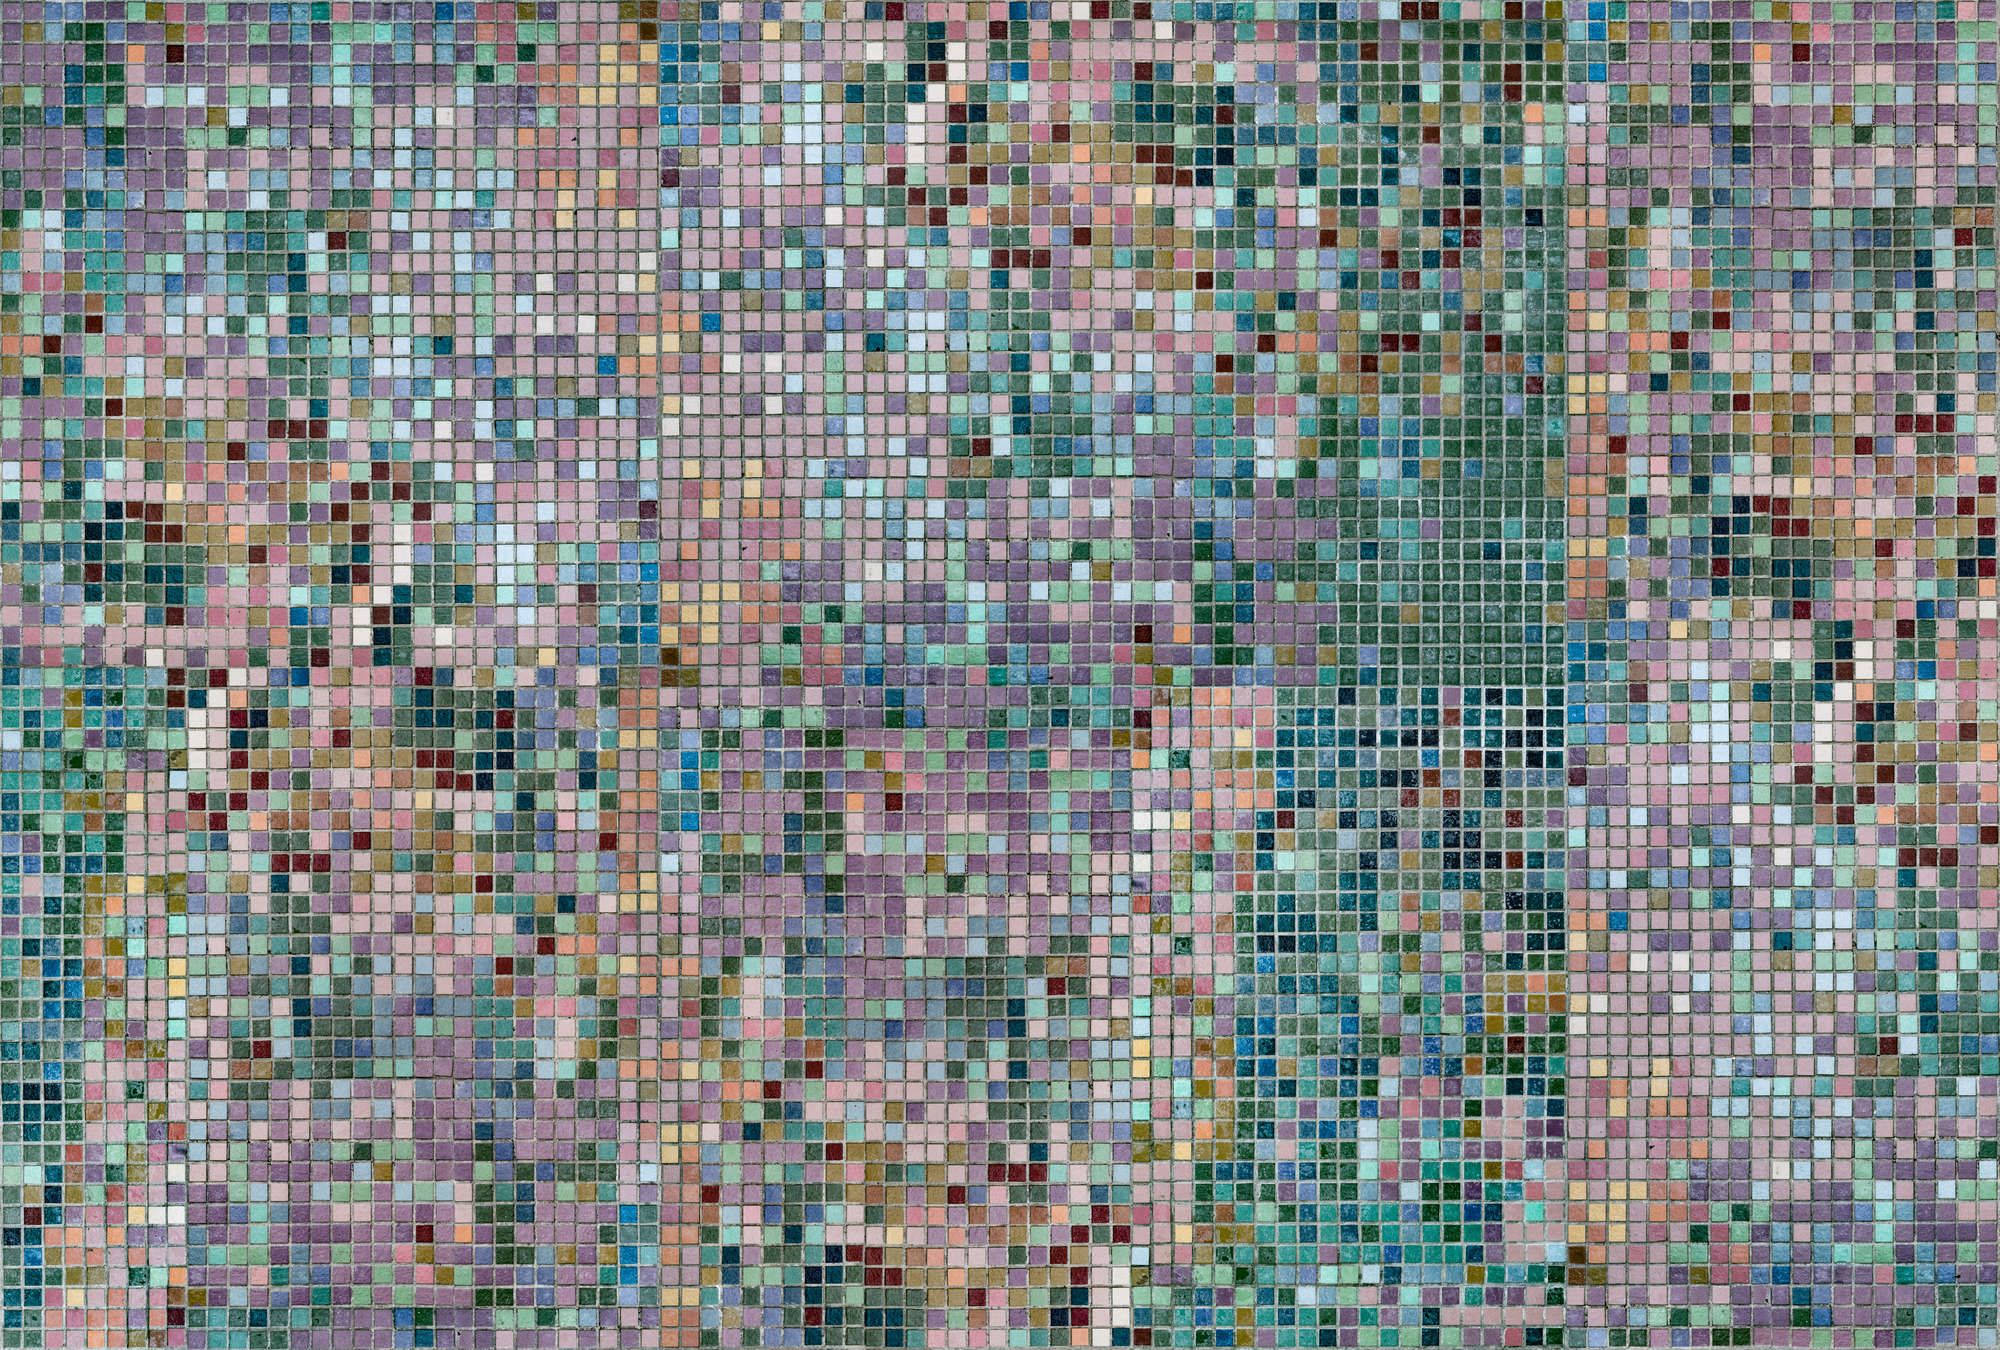             Digital behang »grand central« - Mozaïekpatroon in heldere kleuren - Gladde, licht parelmoerachtige vliesstof
        